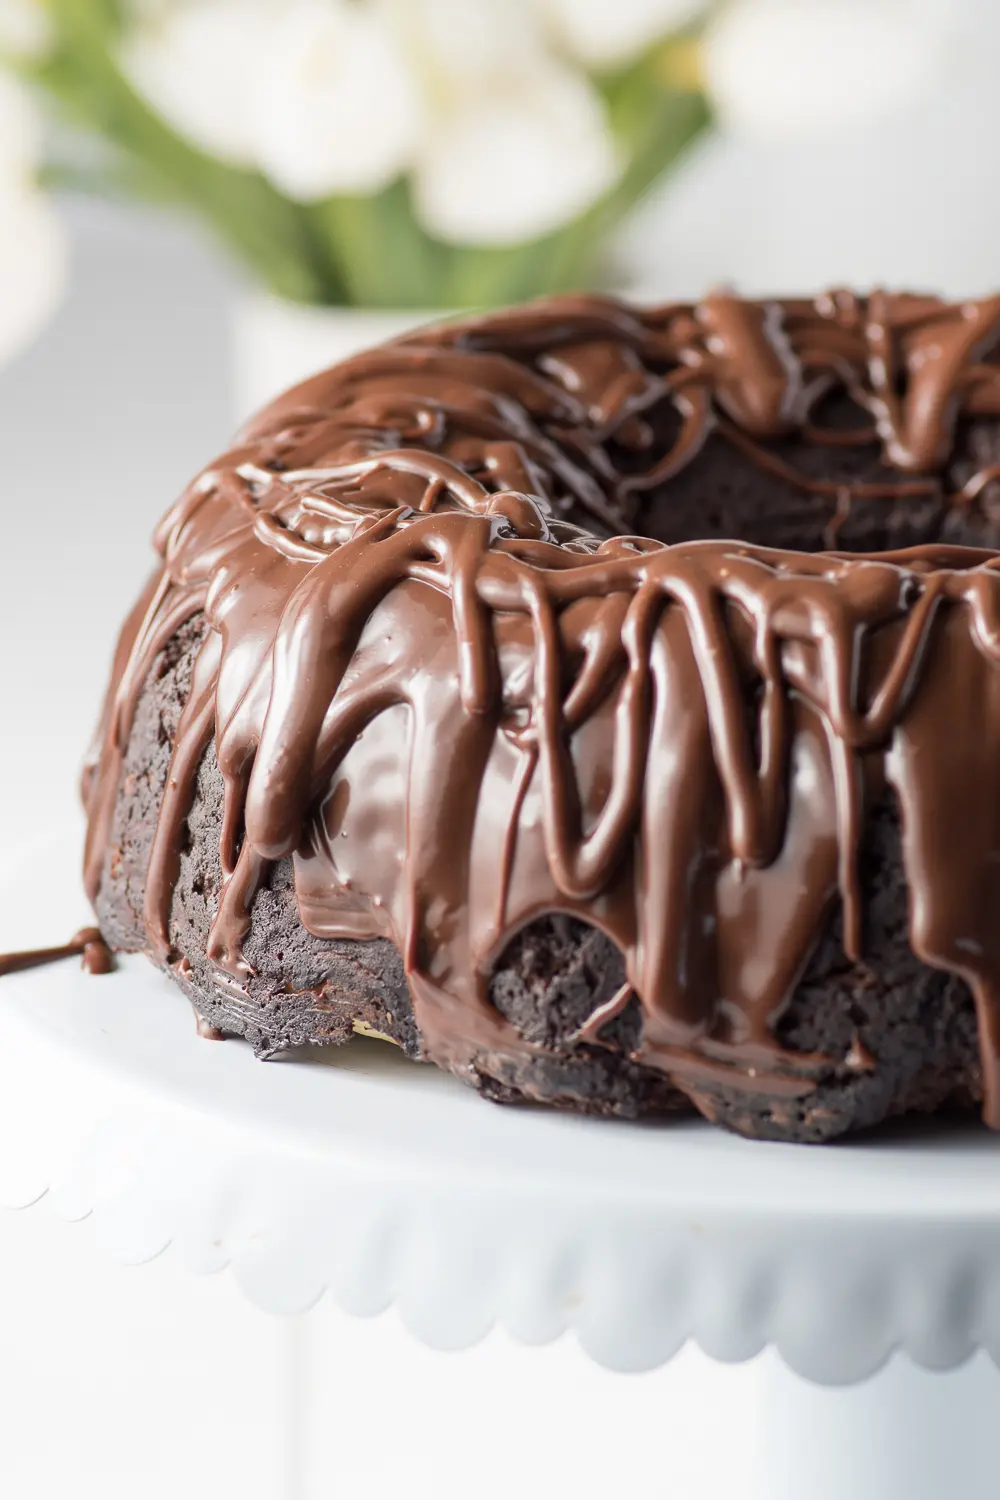 Dark chocolate ganache dripping from a chocolate bundt cake